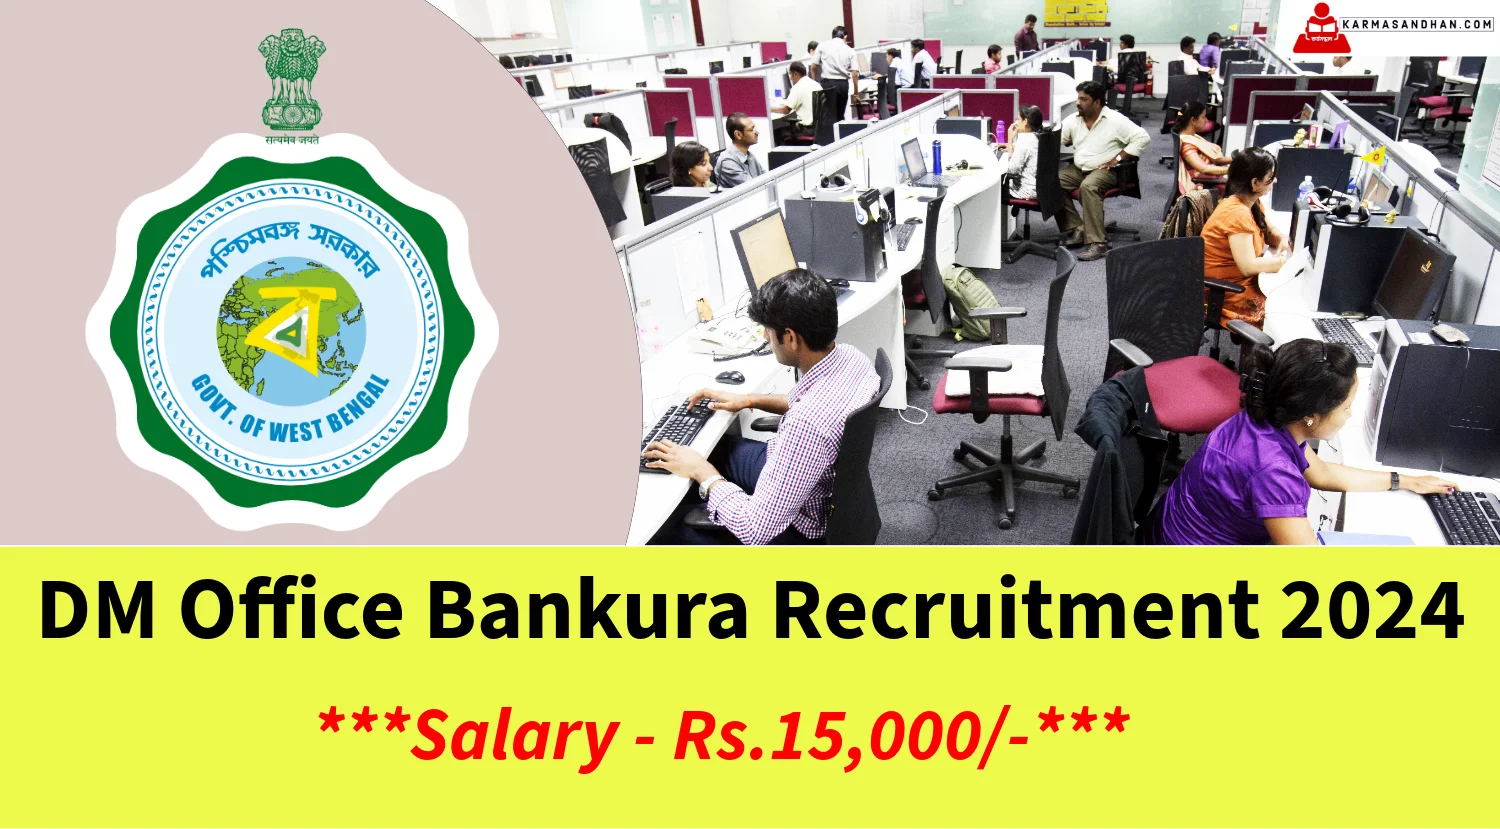 DM Office Bankura Recruitment 2024 Notification out